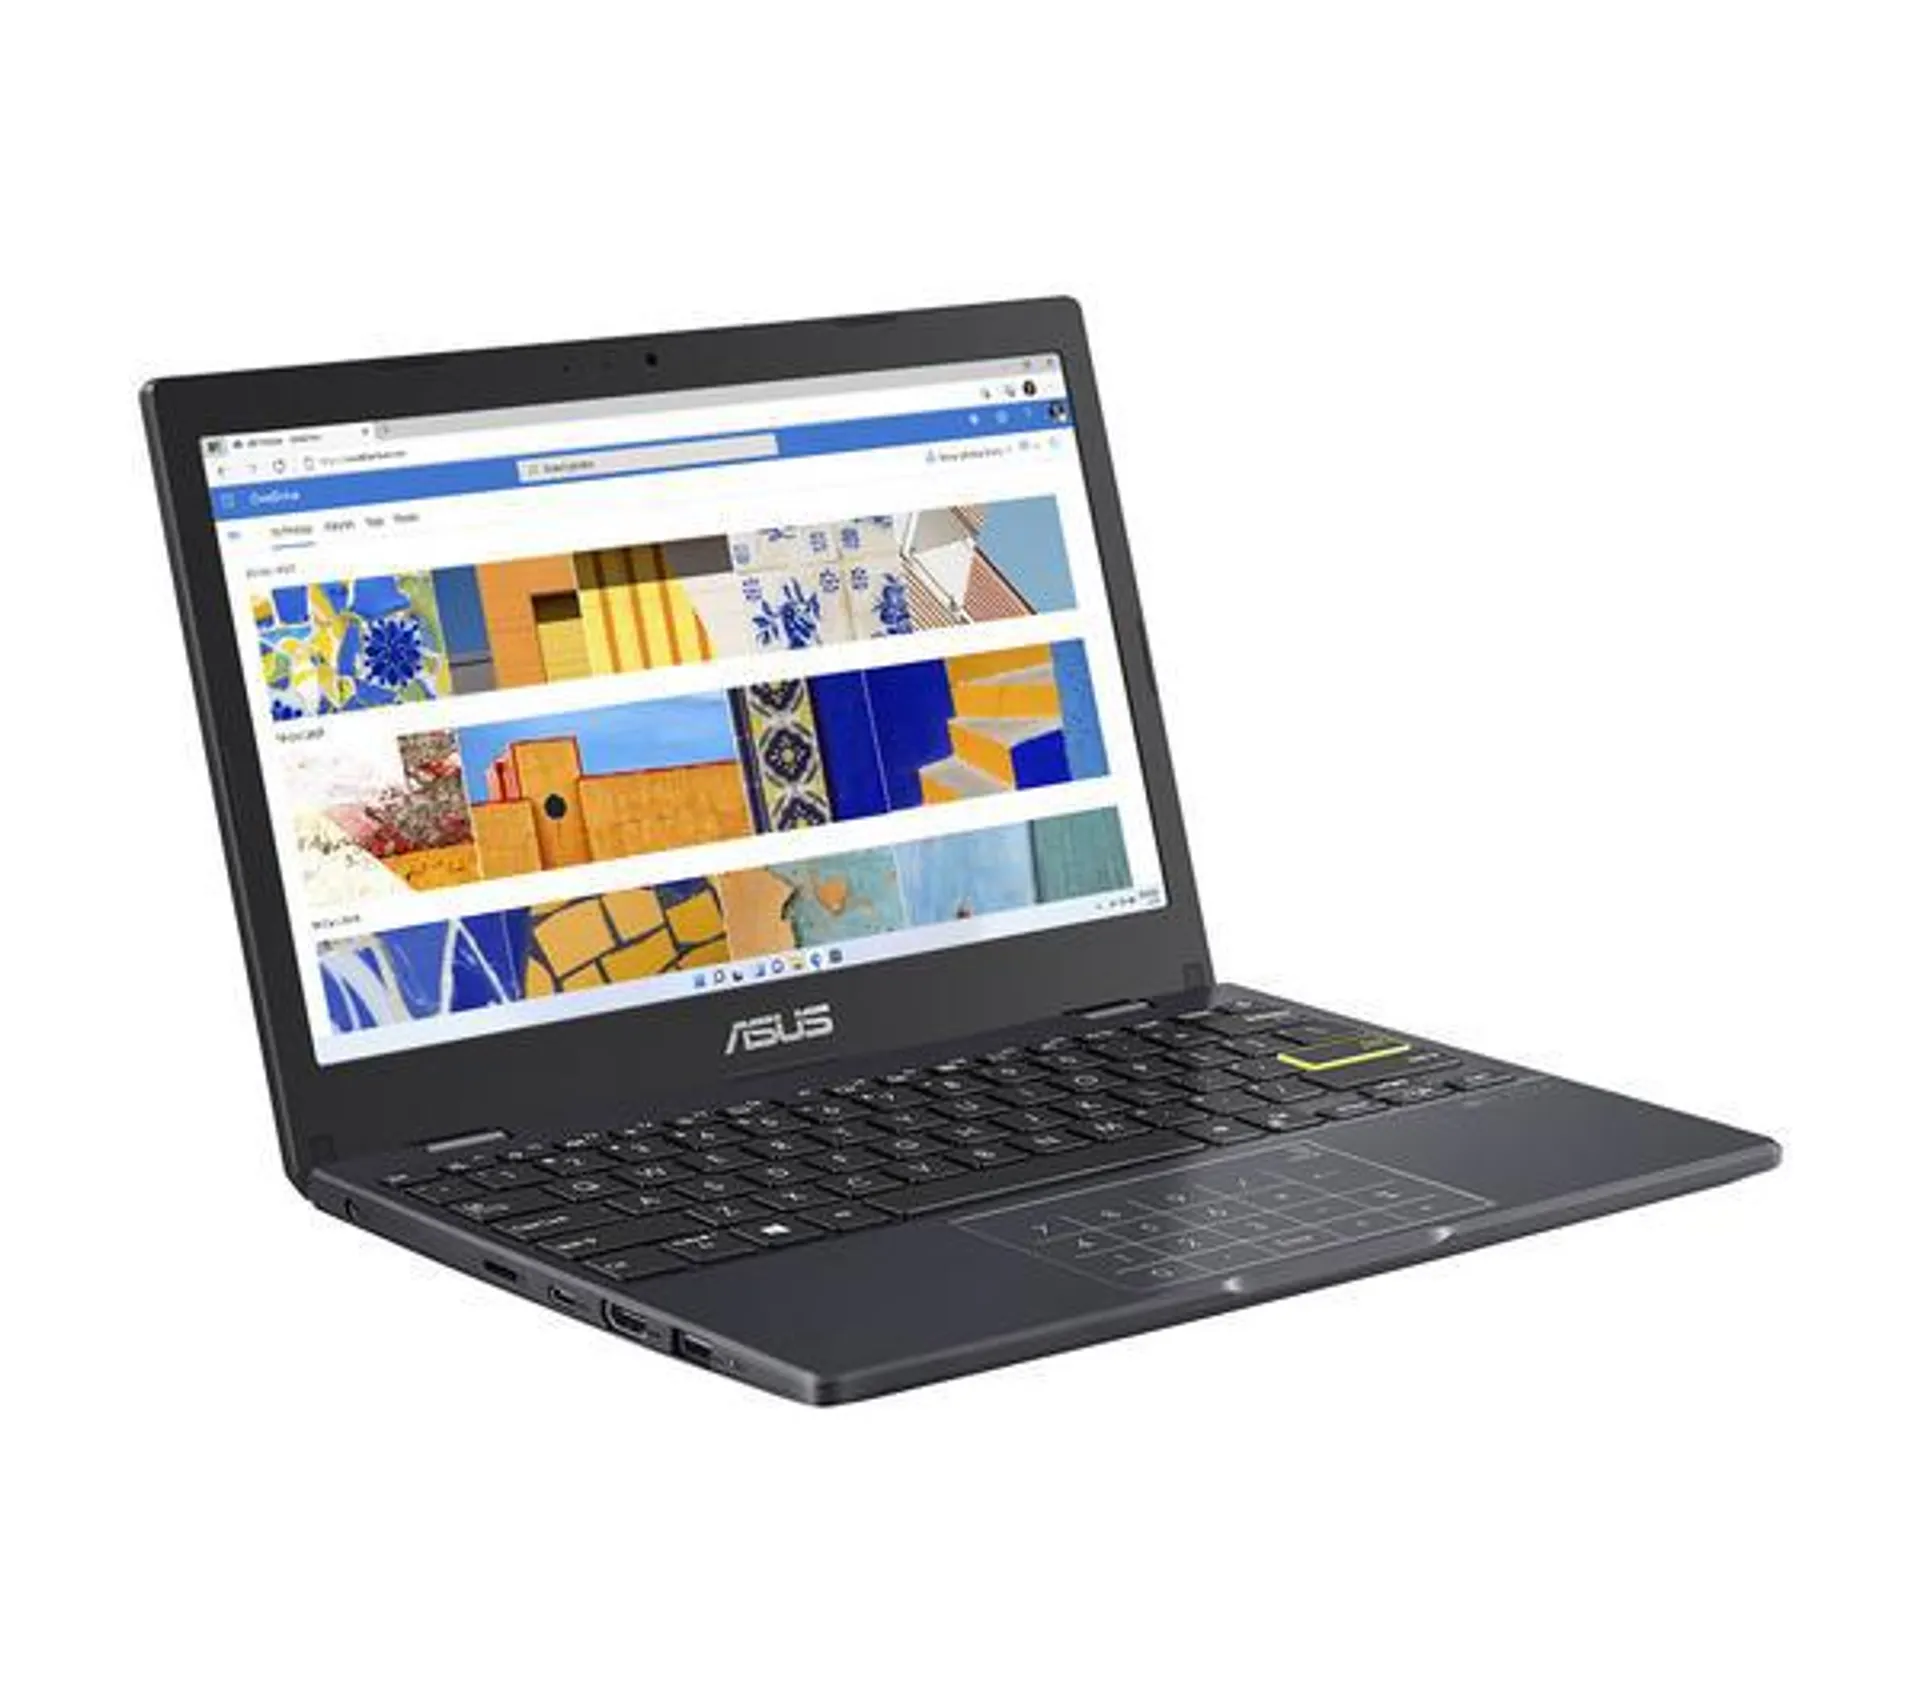 ASUS E210MA 11.6" Laptop - Intel® Celeron®, 64 GB eMMC, Blue